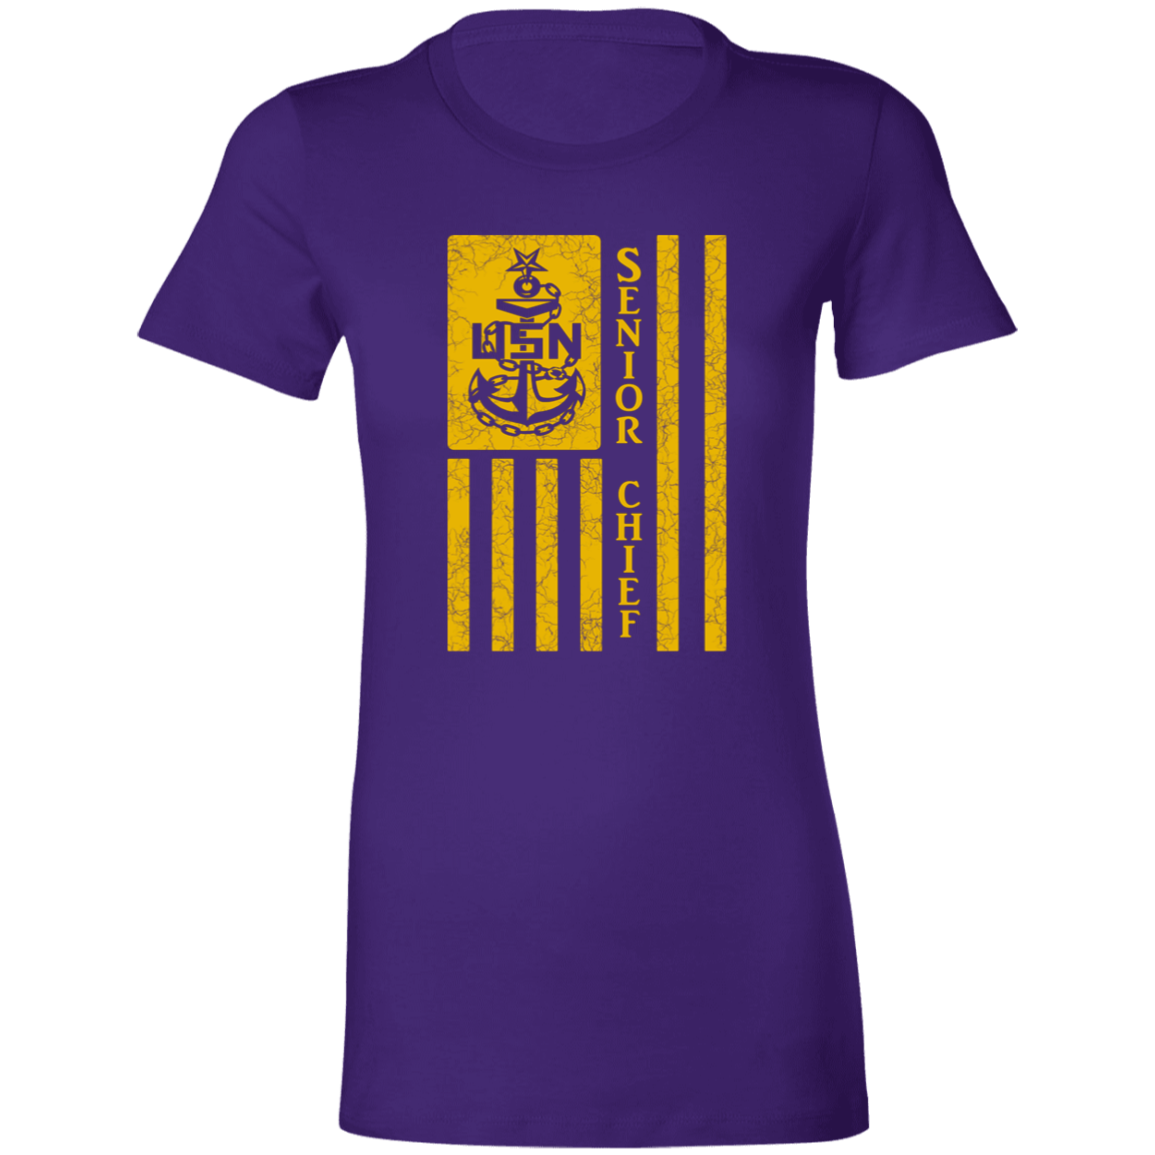 Senior Chief Flag Gold Ladies' Favorite T-Shirt